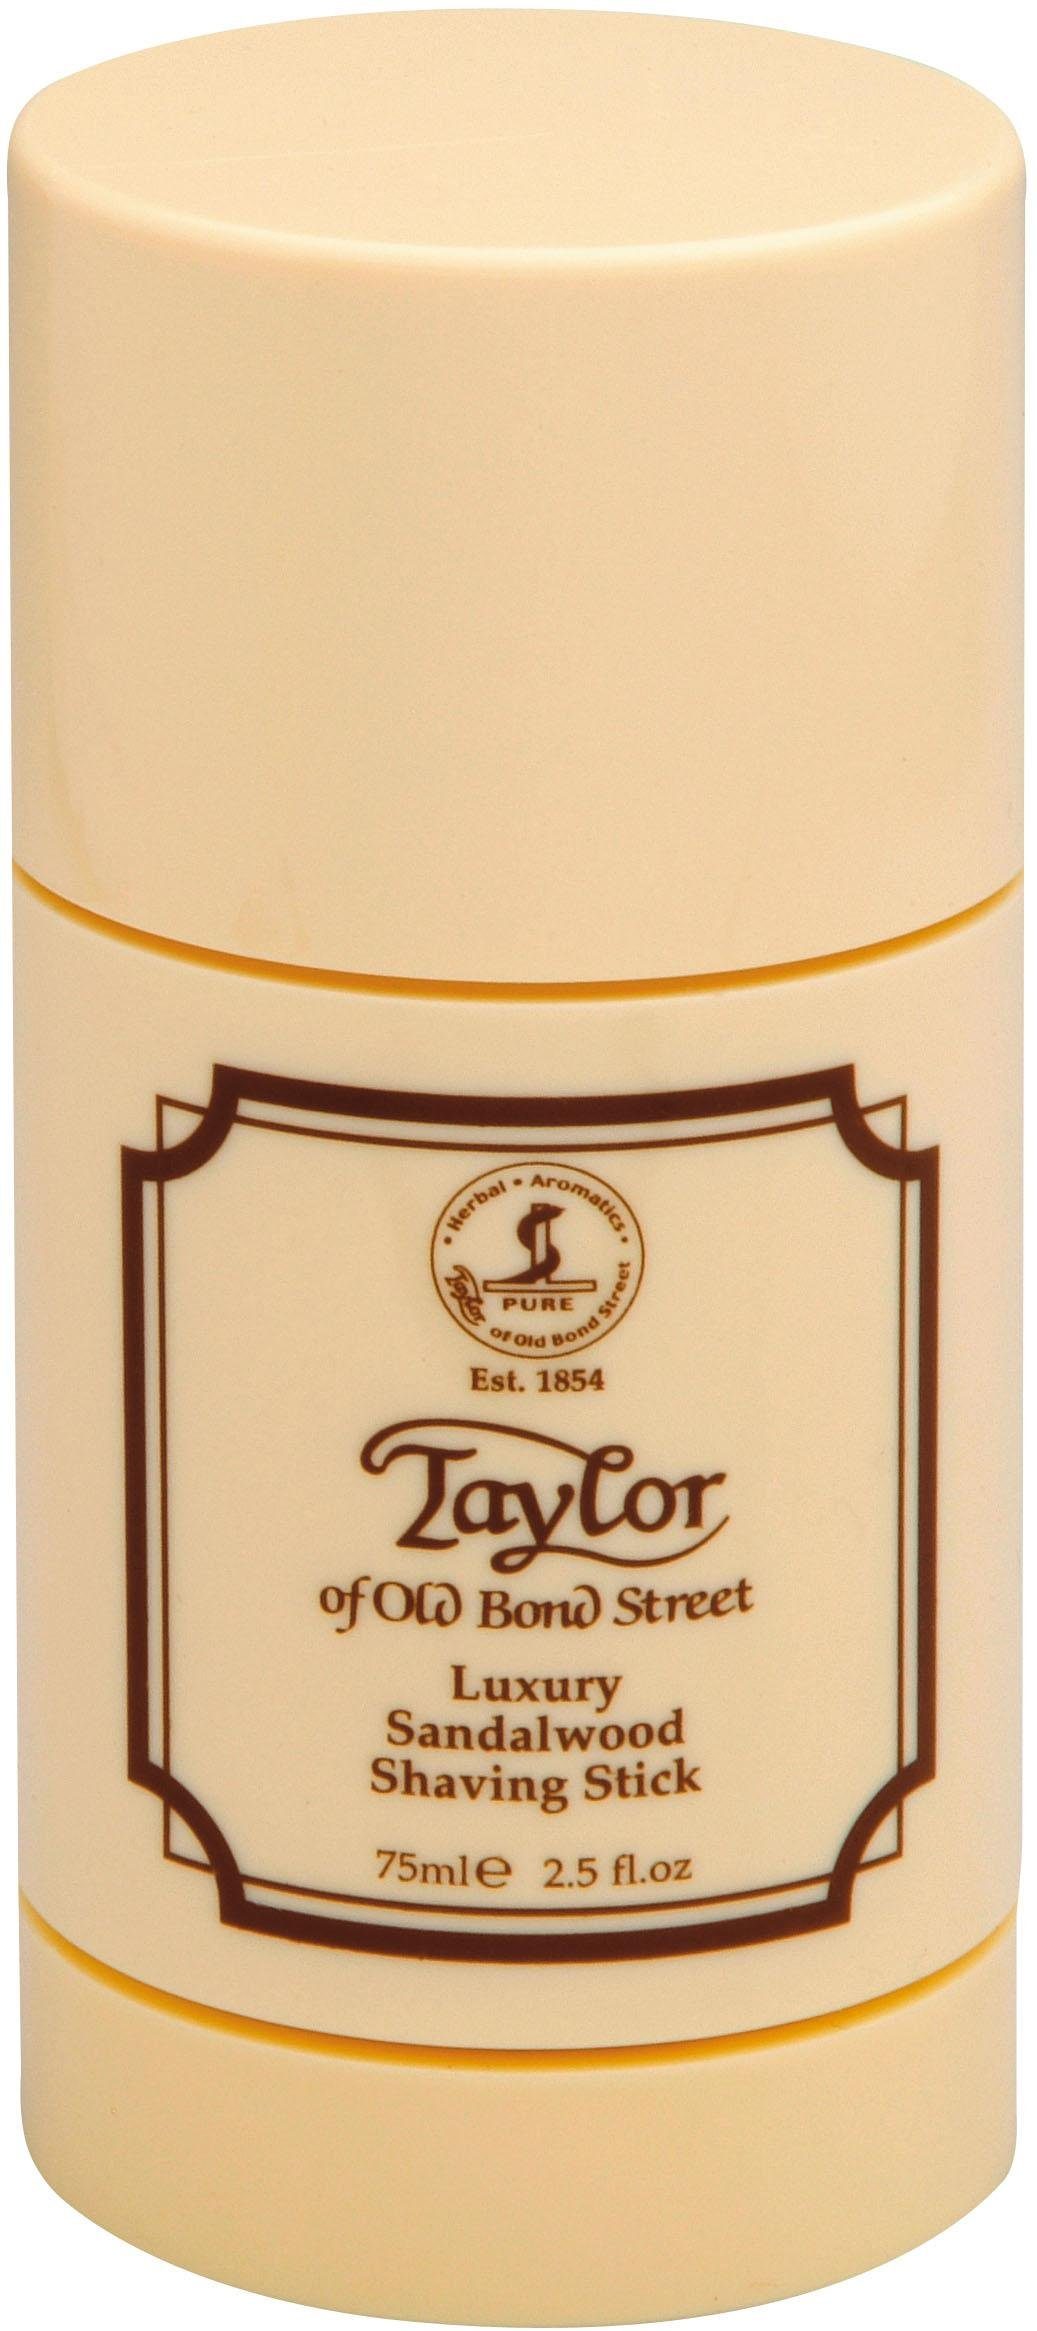 Taylor Bond Sandalwood, of Street Shaving Stick Rasierseife Stift Soap Old